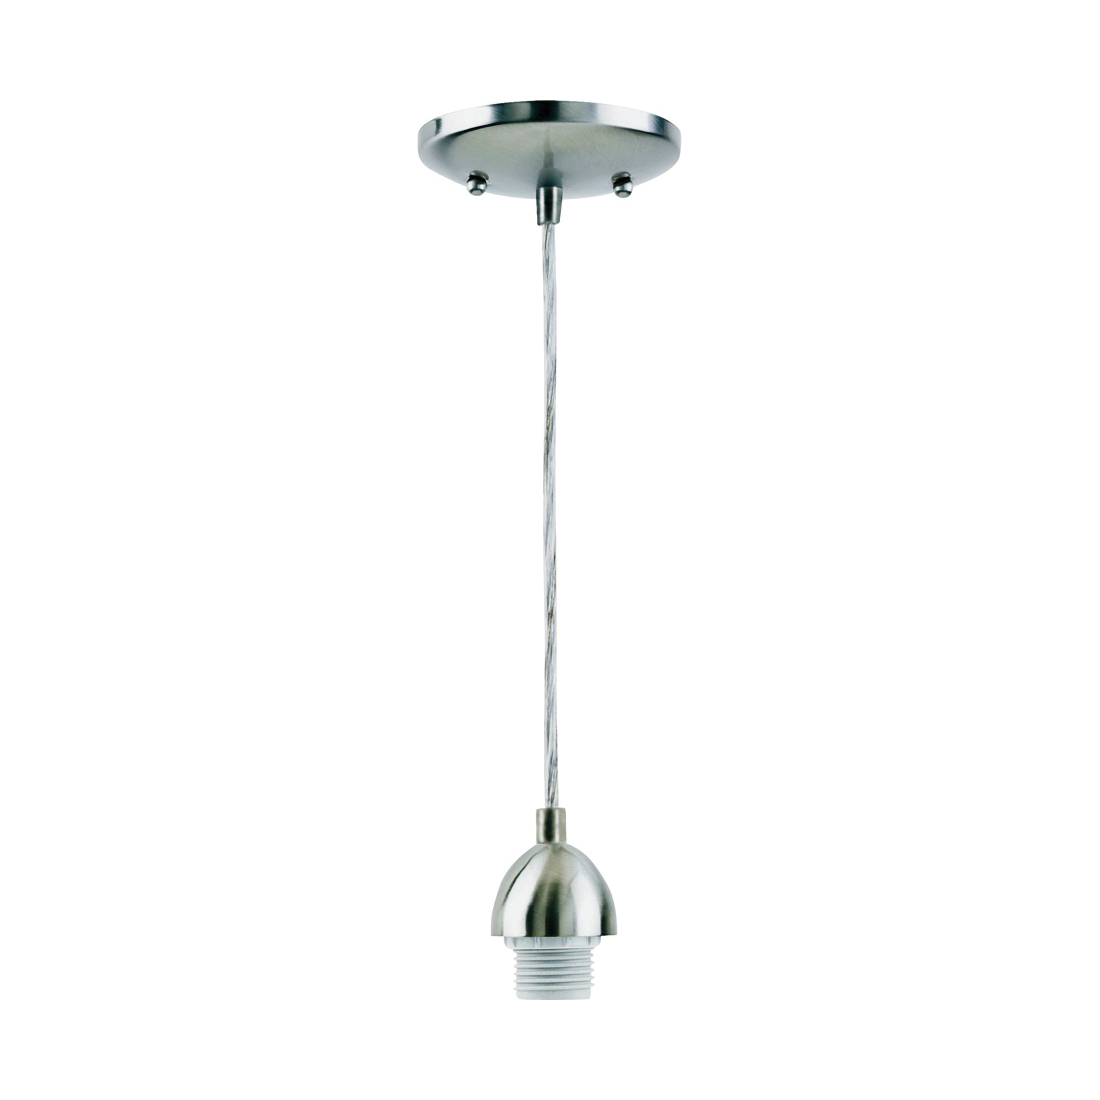 Westinghouse 7028400 Mini Pendant Light Fixture, 1-Lamp, Incandescent Lamp, Brushed Nickel Fixture - 1